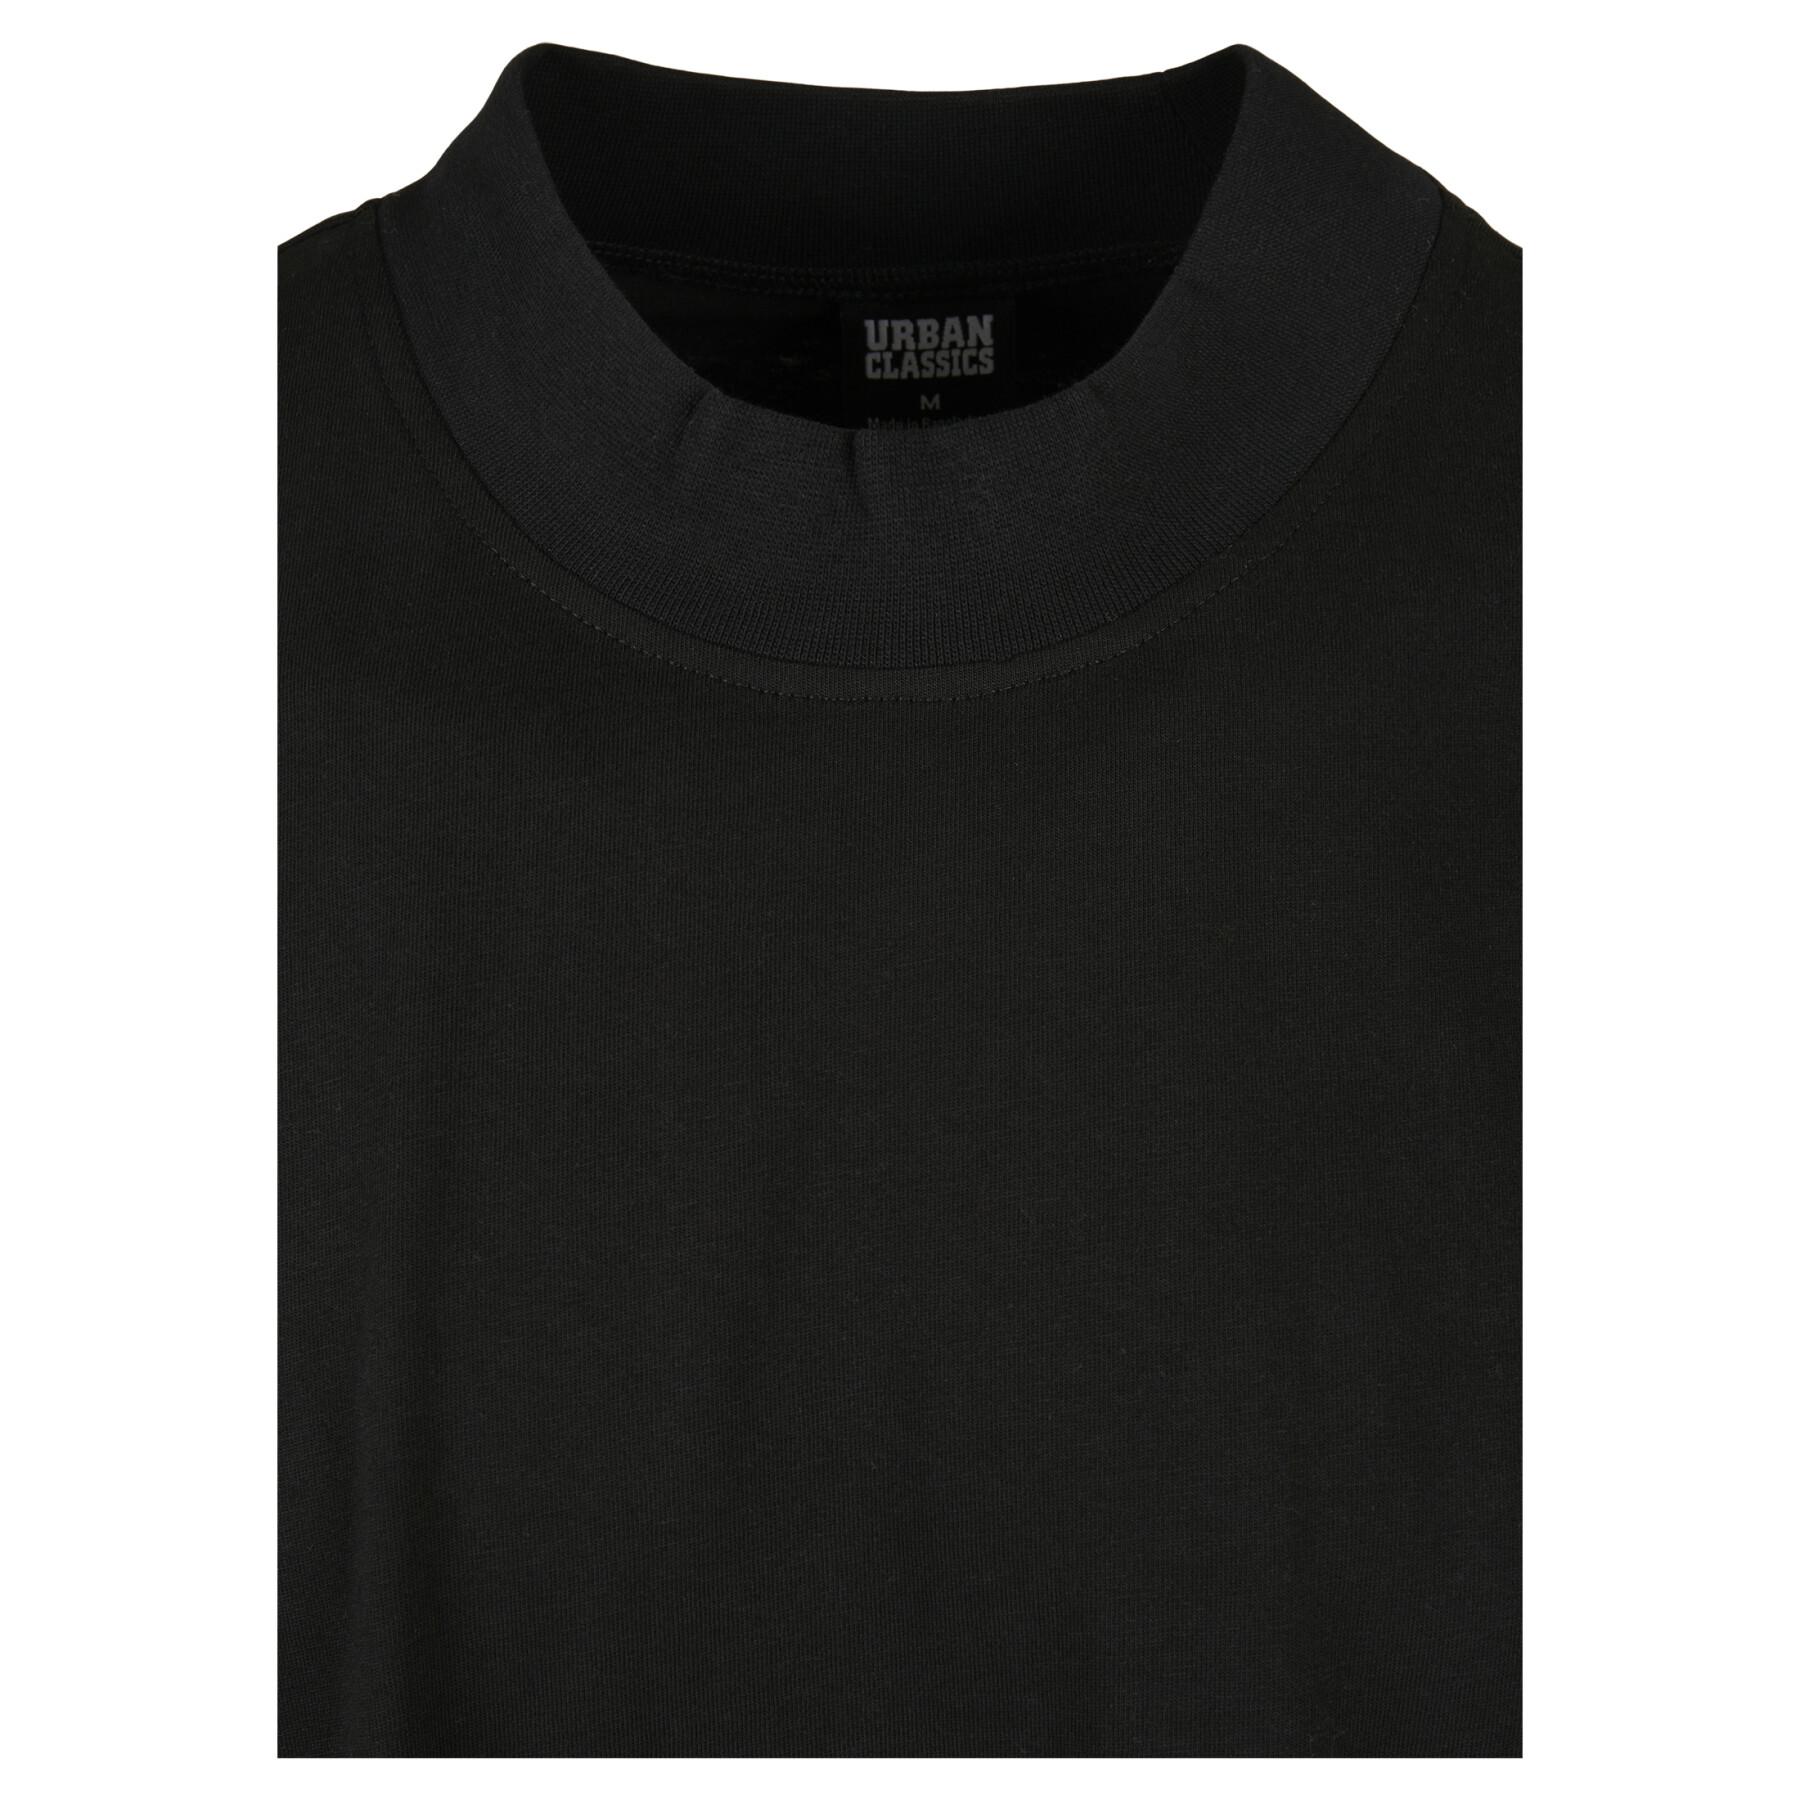 T-shirt Urban Classics oversized mock neck